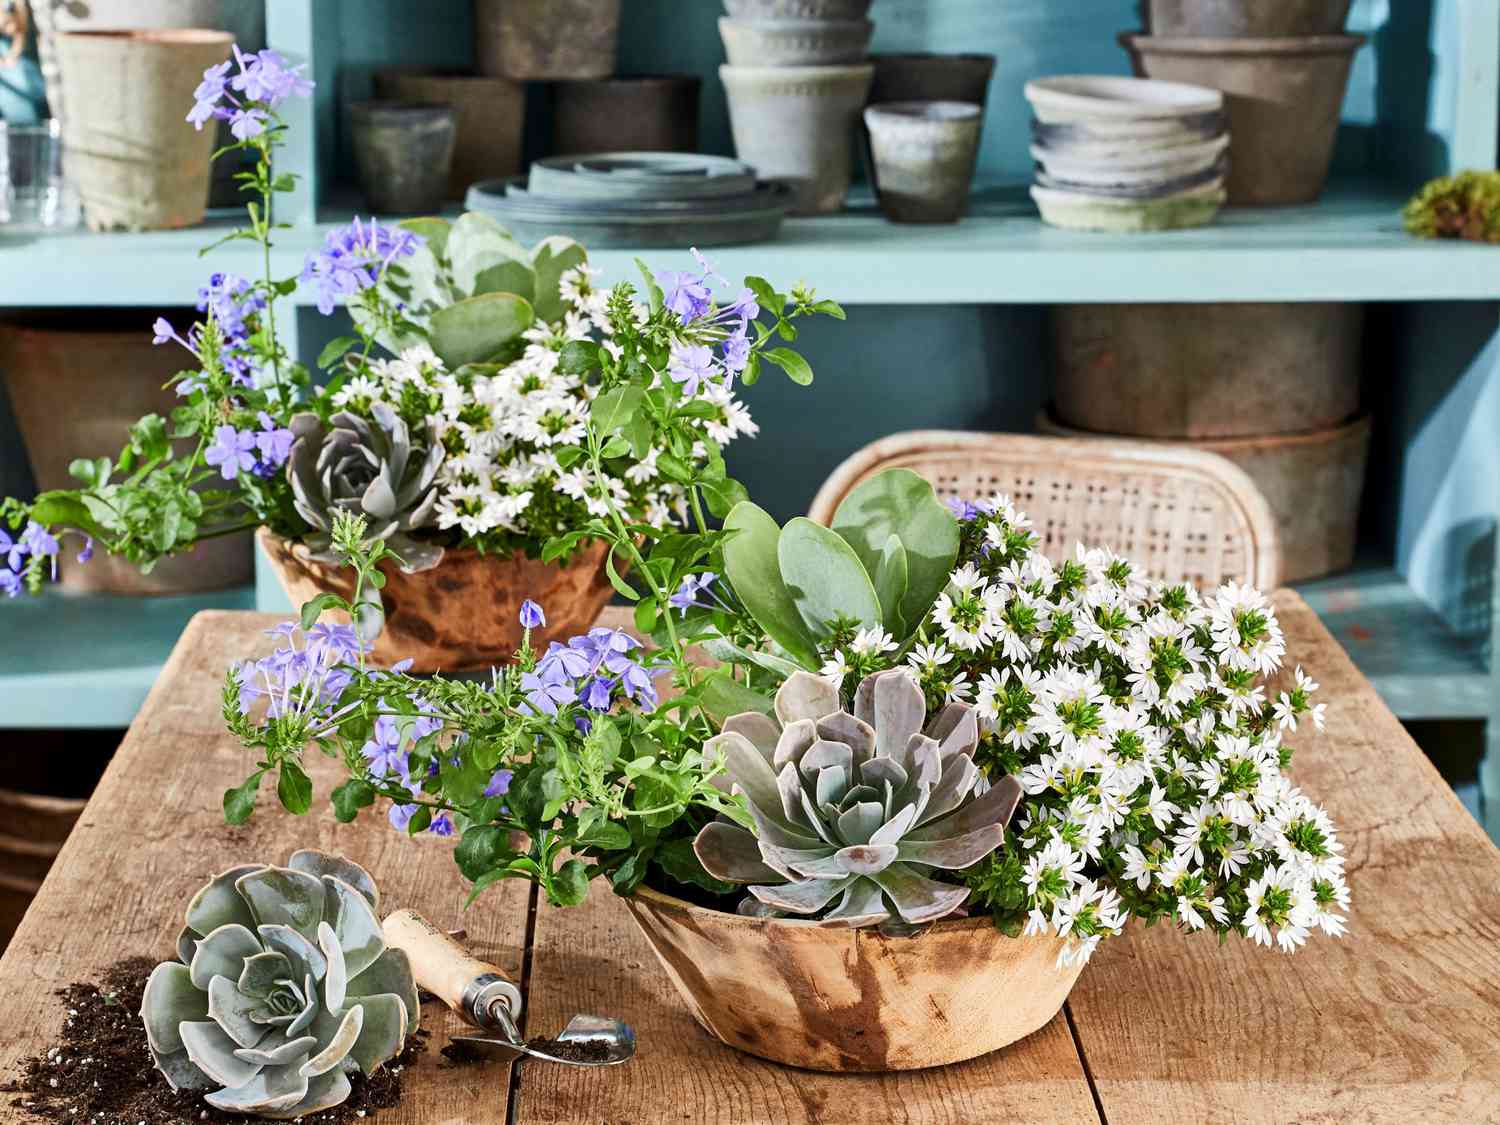 Wooden Bowl Container Garden with white scaevolas, blue plumbagos, ‘Lucita’ echeverias, and flapjack plants